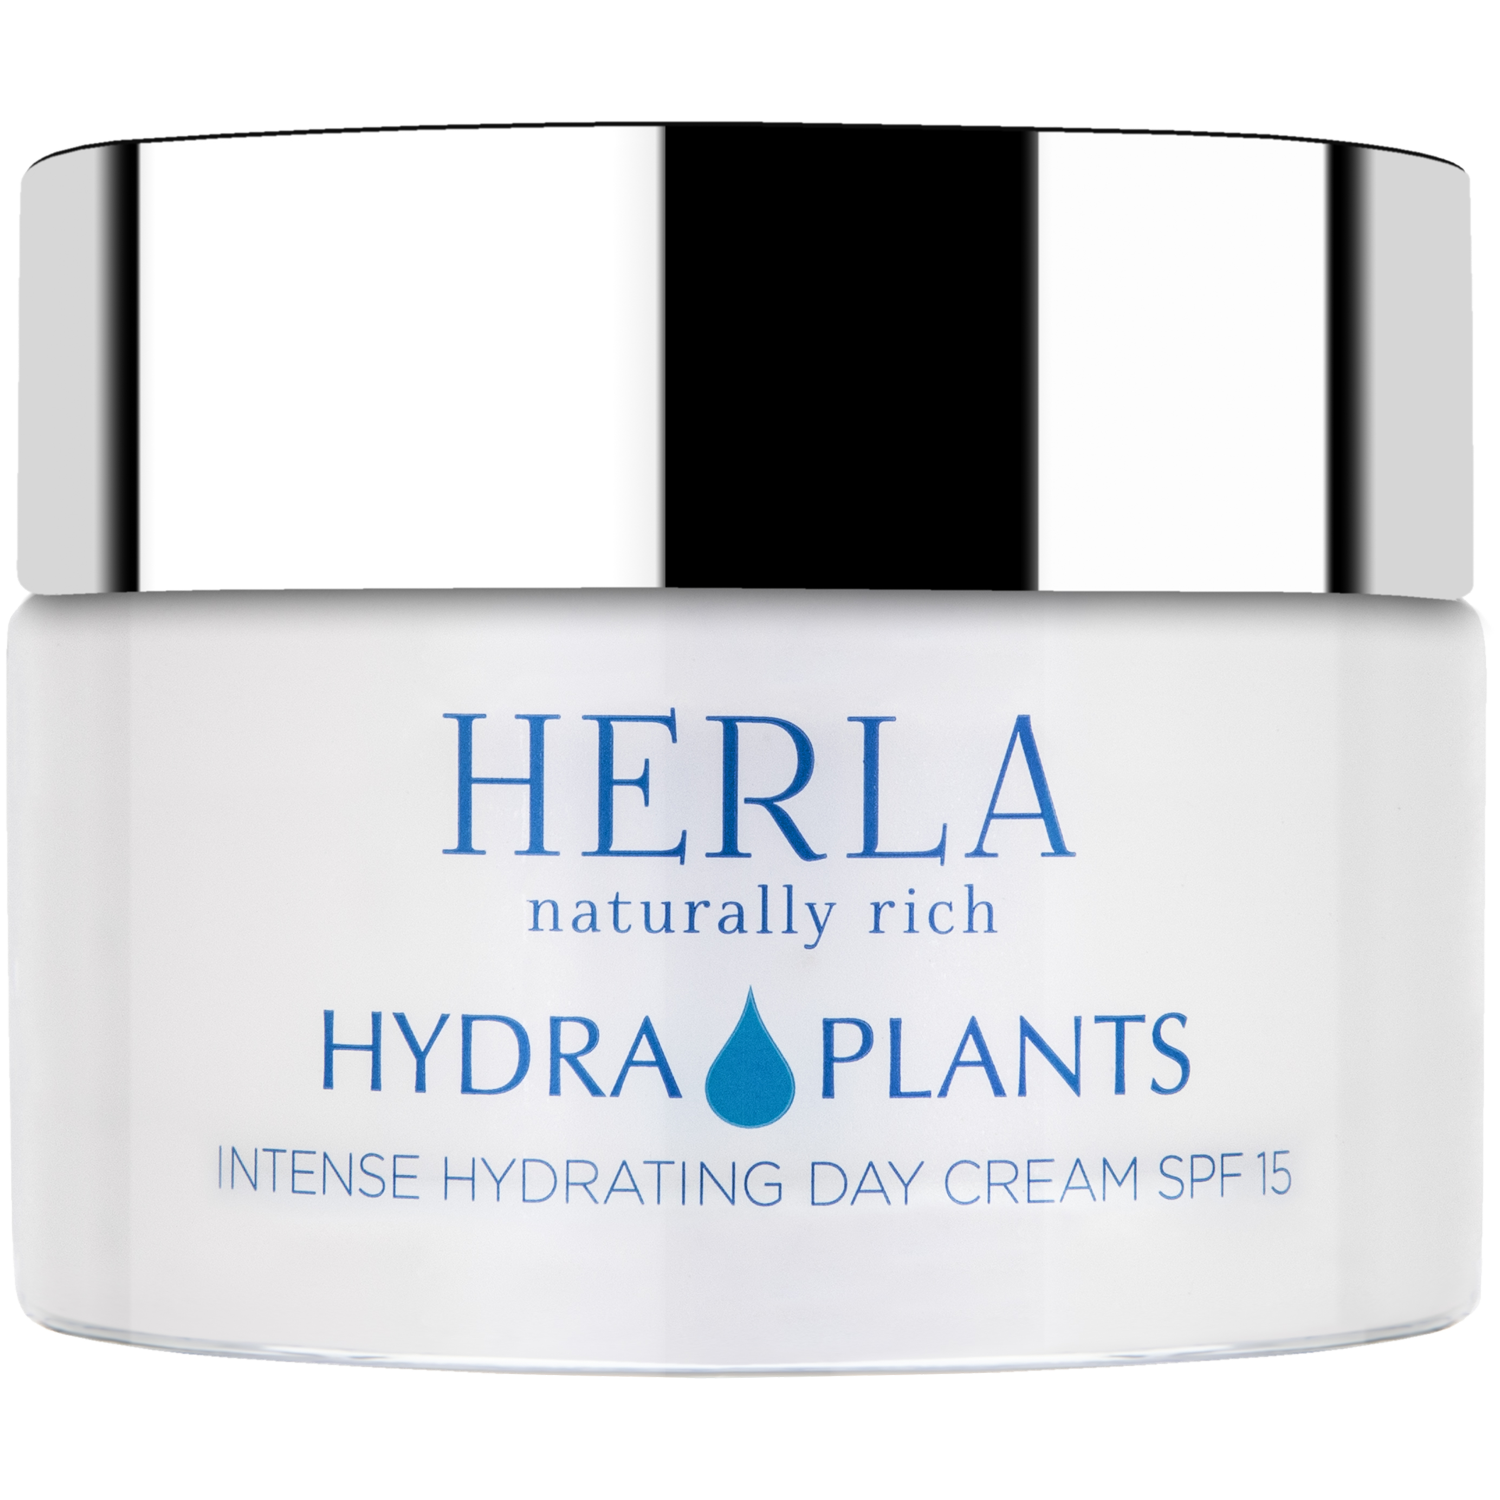 Herla Hydra Plants Limited Edition дневной крем для лица, 50 мл